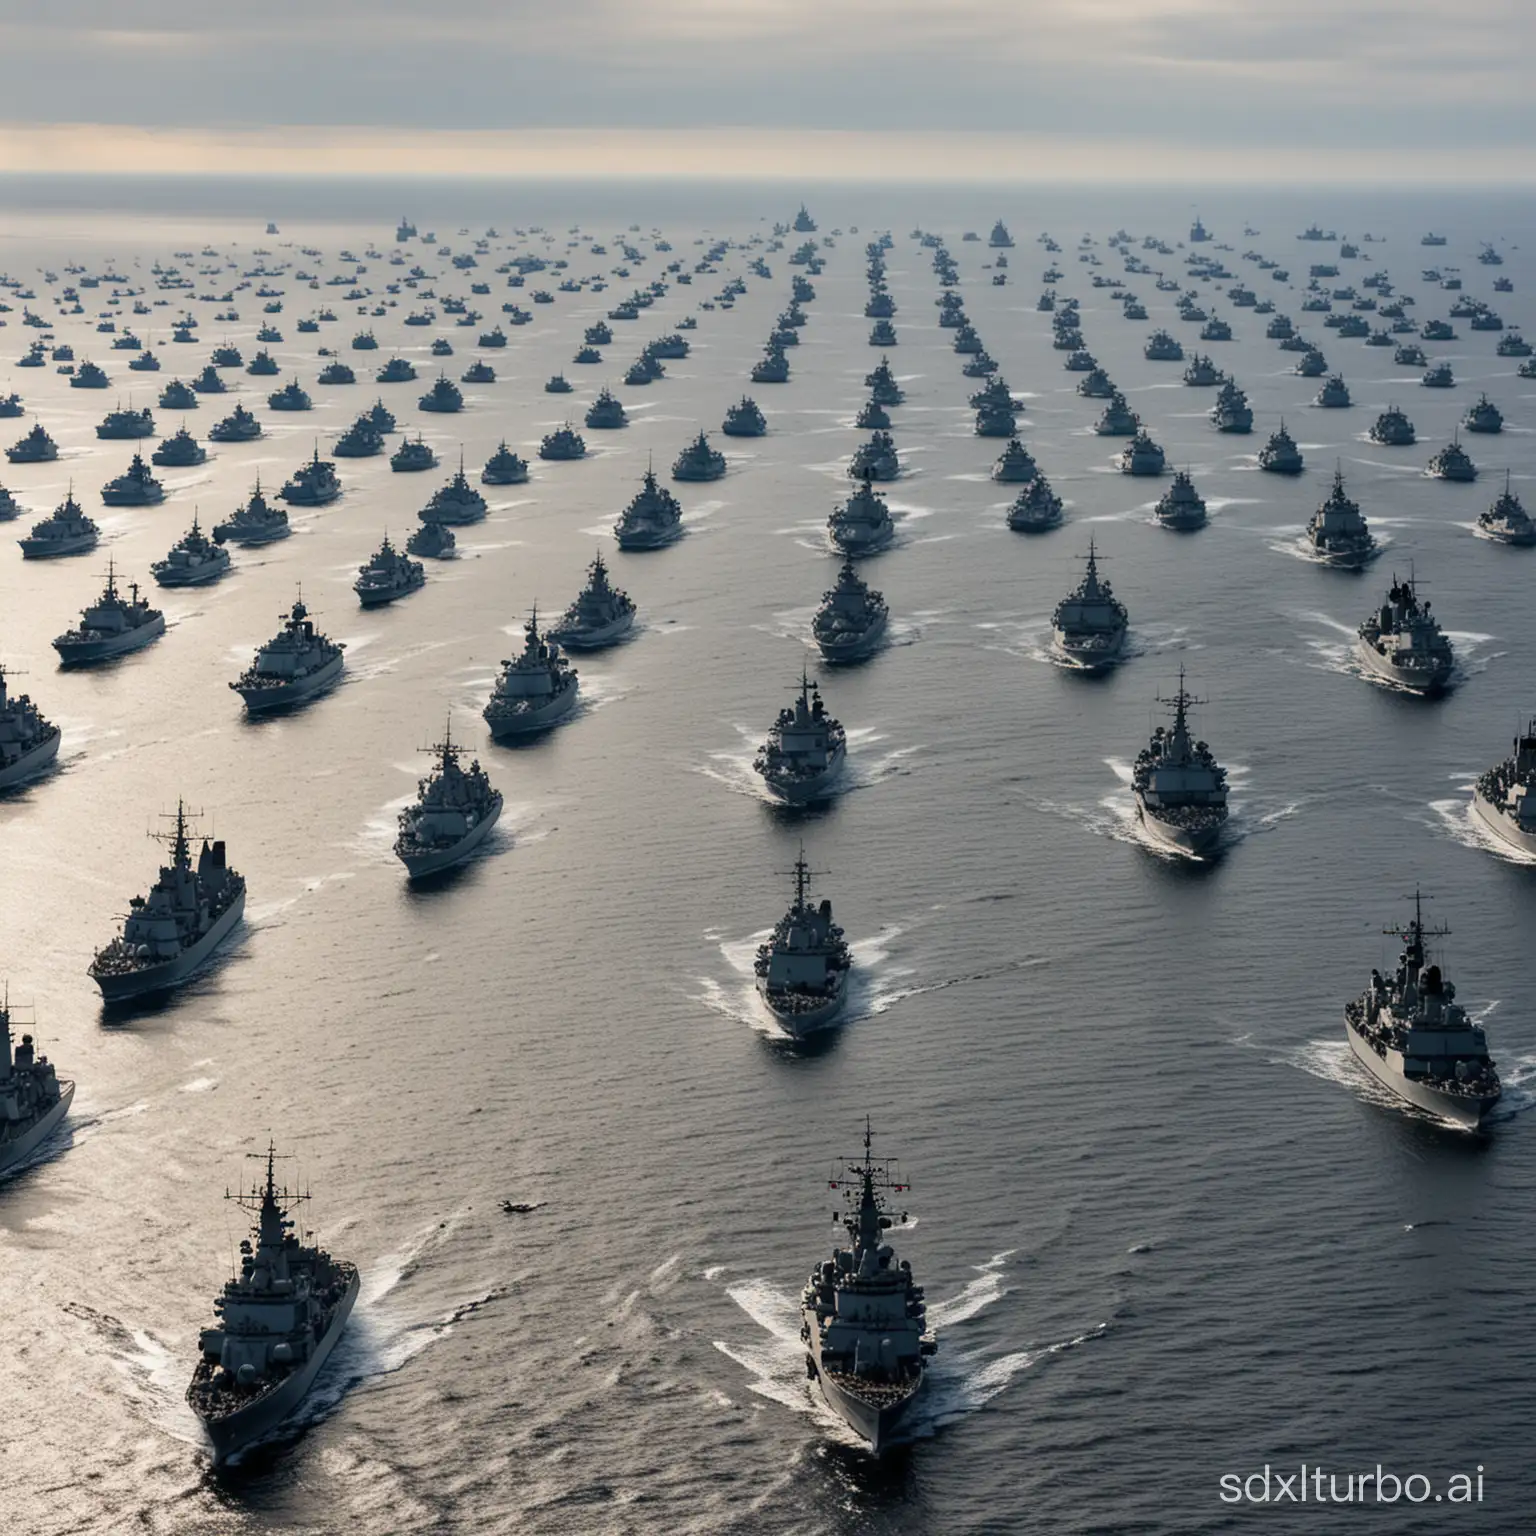 Massive-Fleet-of-Warships-on-the-Horizon-Naval-Armada-Gathering-Strength